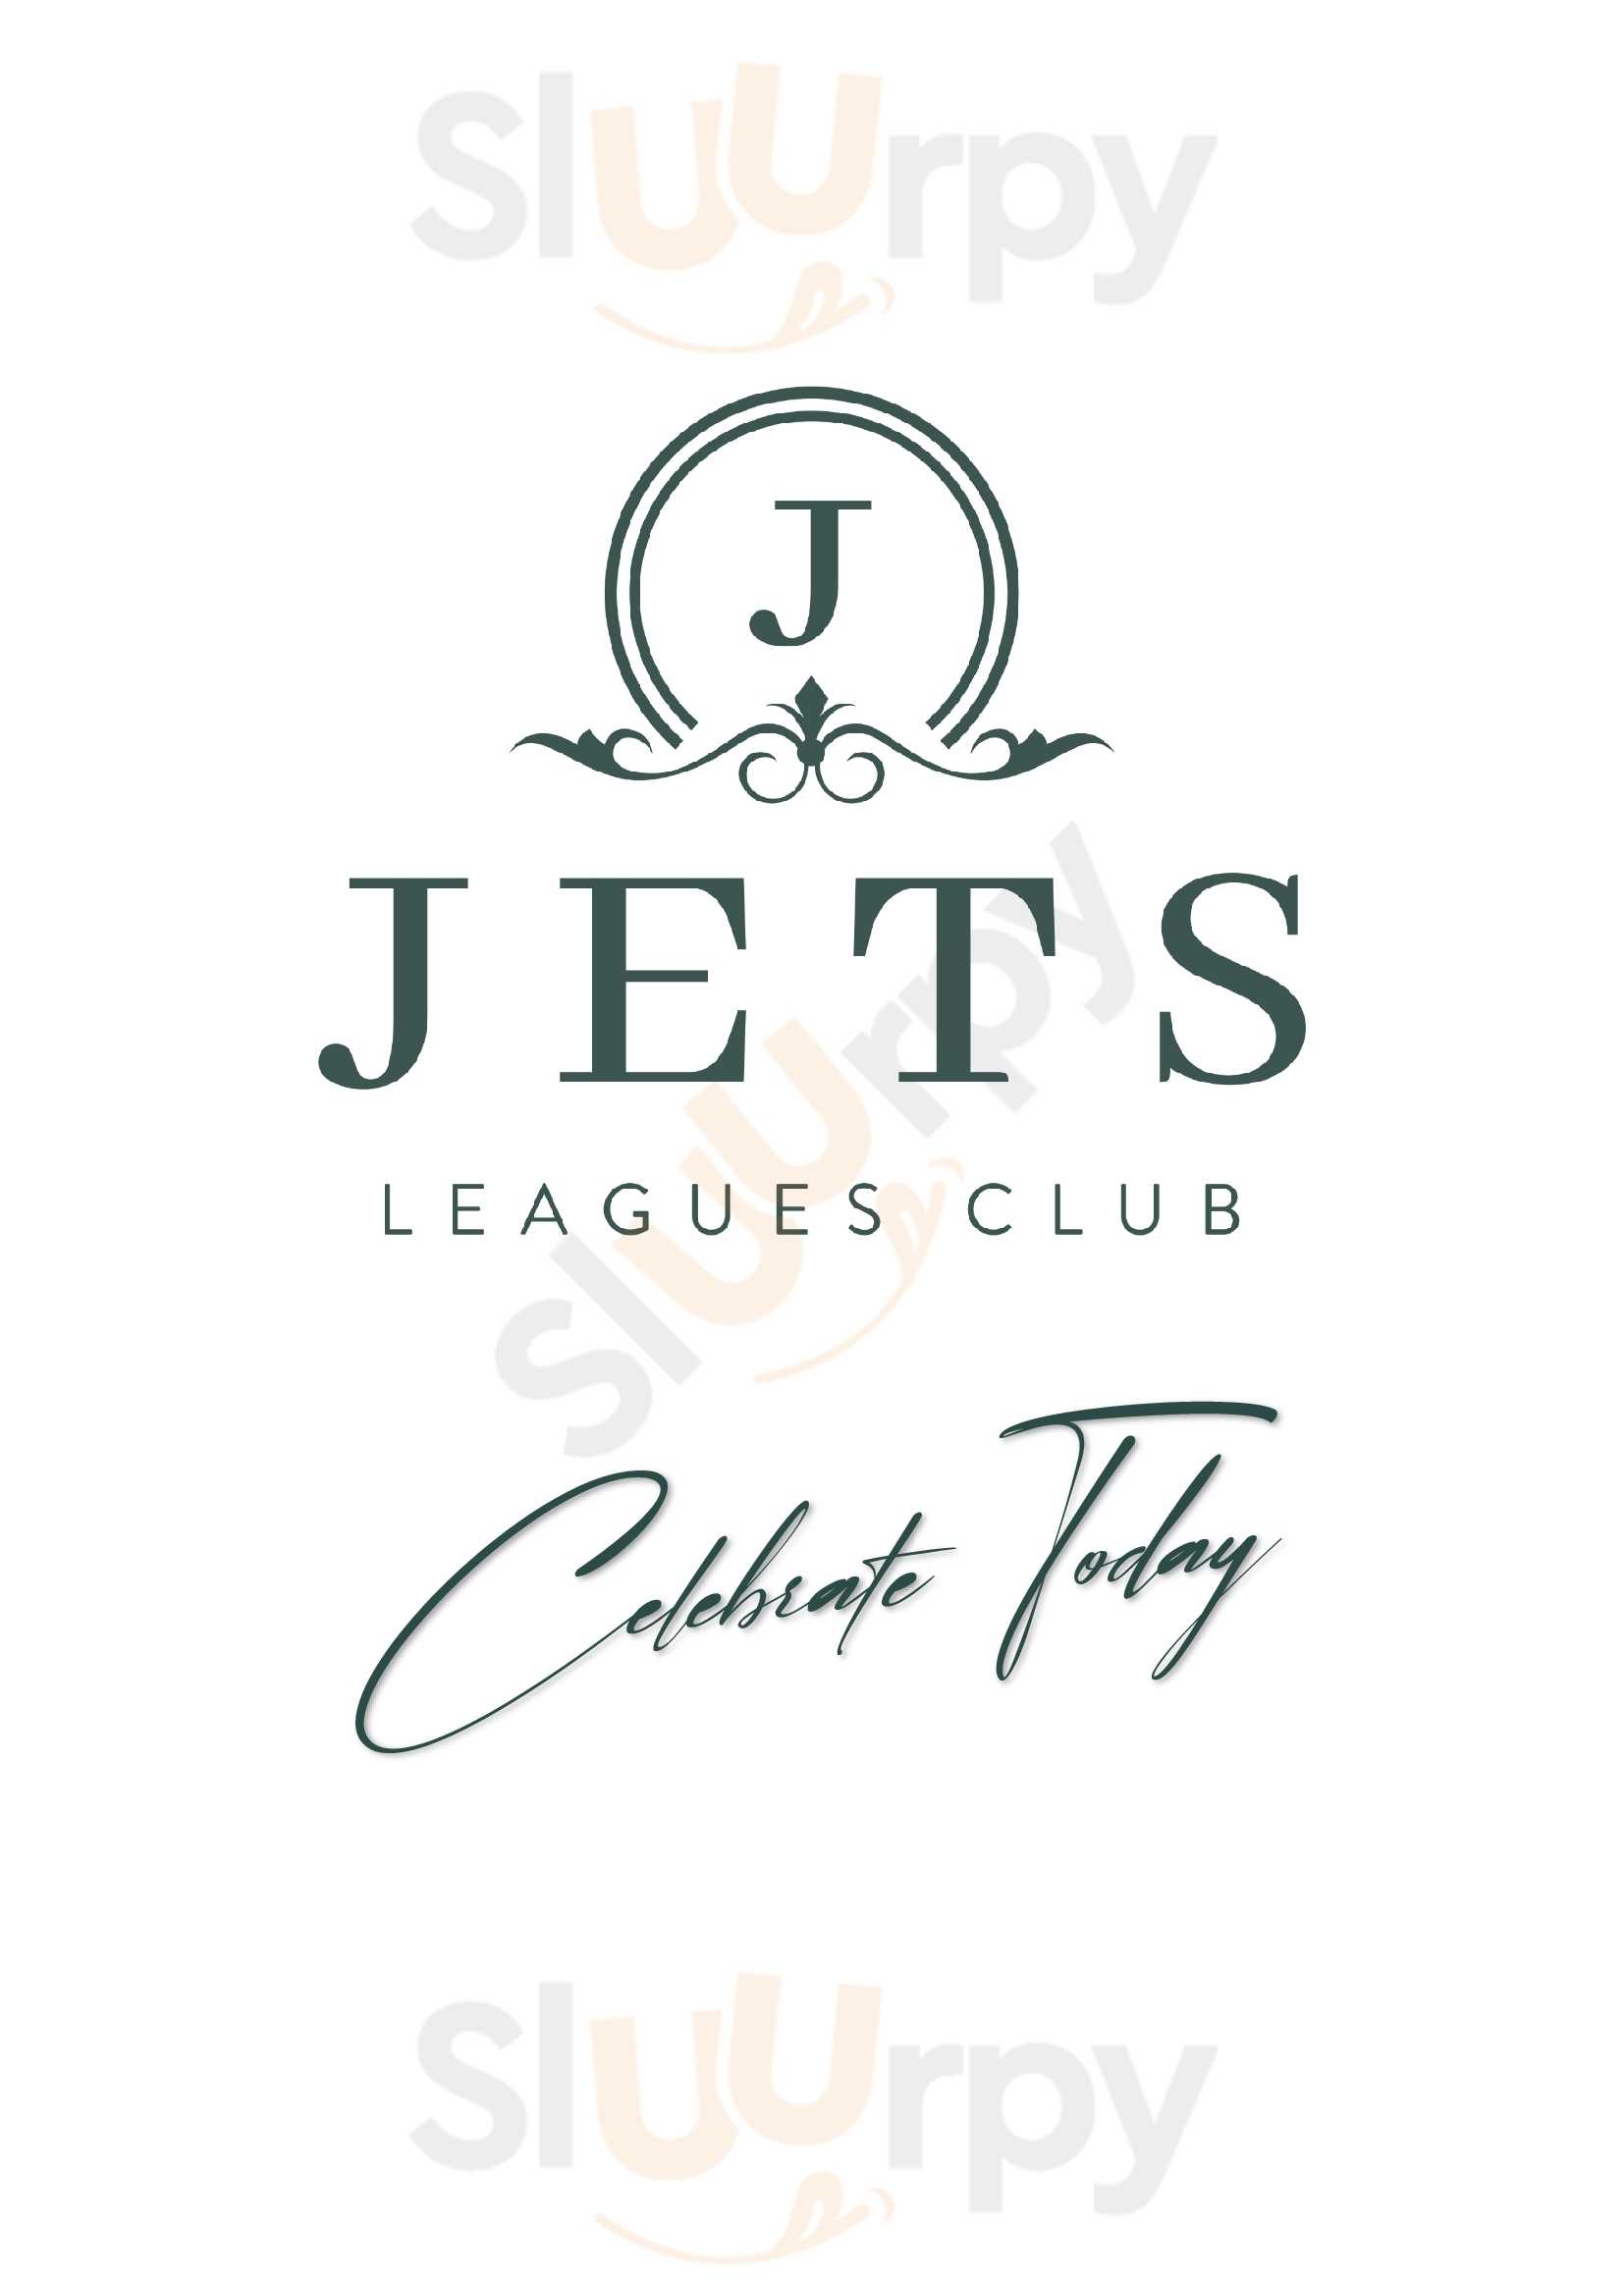 Jets Leagues Club Ipswich Menu - 1